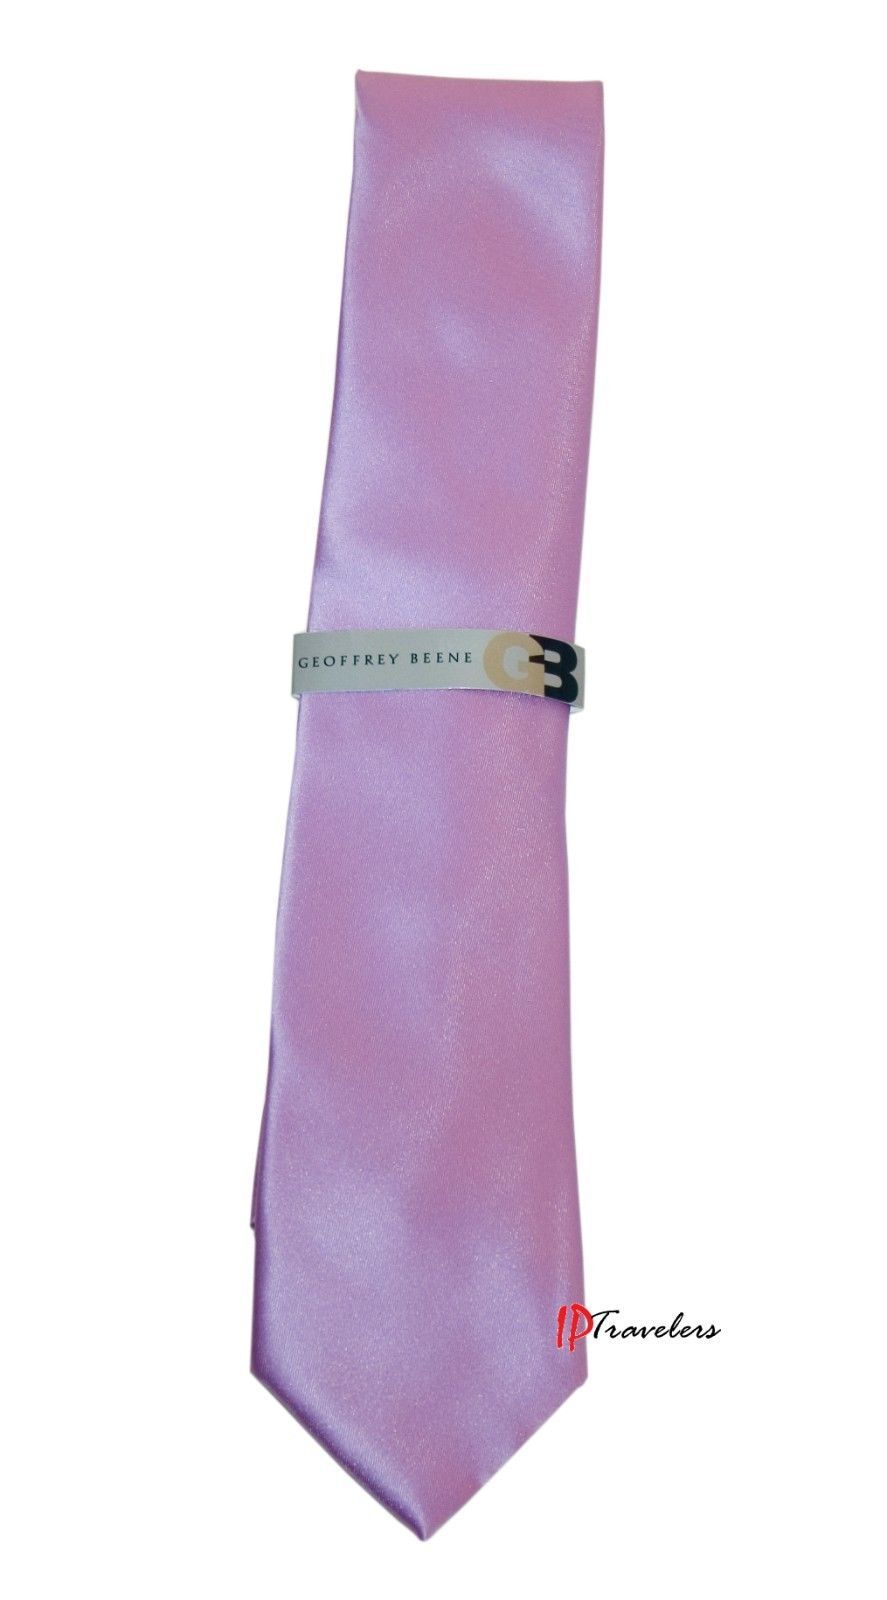 Geoffrey Beene Men's Neck Tie Solid Purple 100% Polyester Classic Size $55 - $22.00